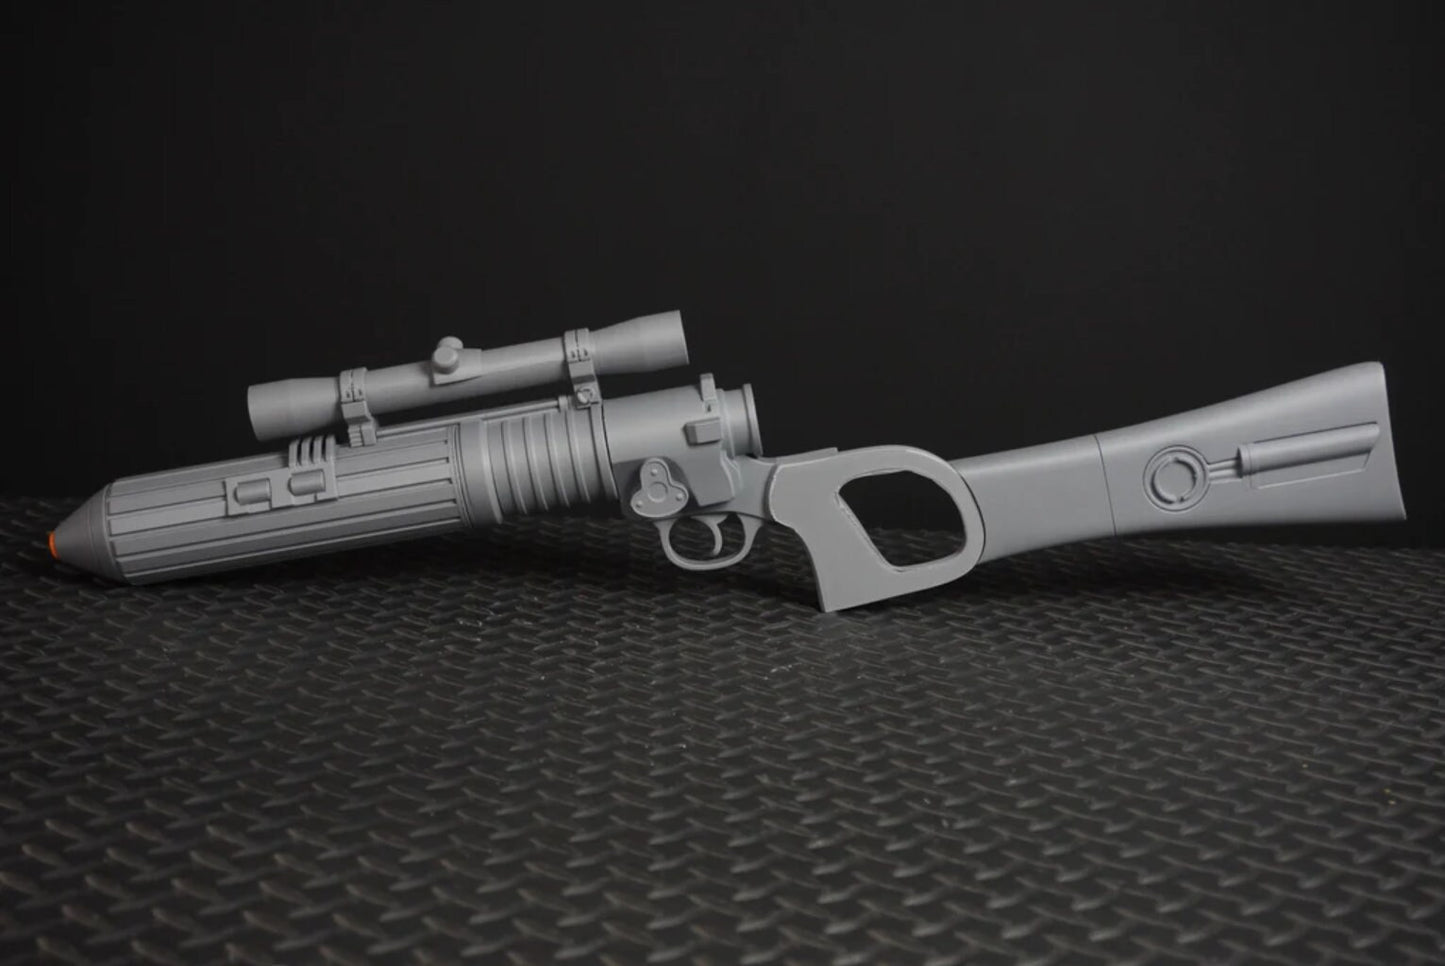 Boba Fett EE3 Blaster Replica - 3D Printed Prop For Cosplay & Display